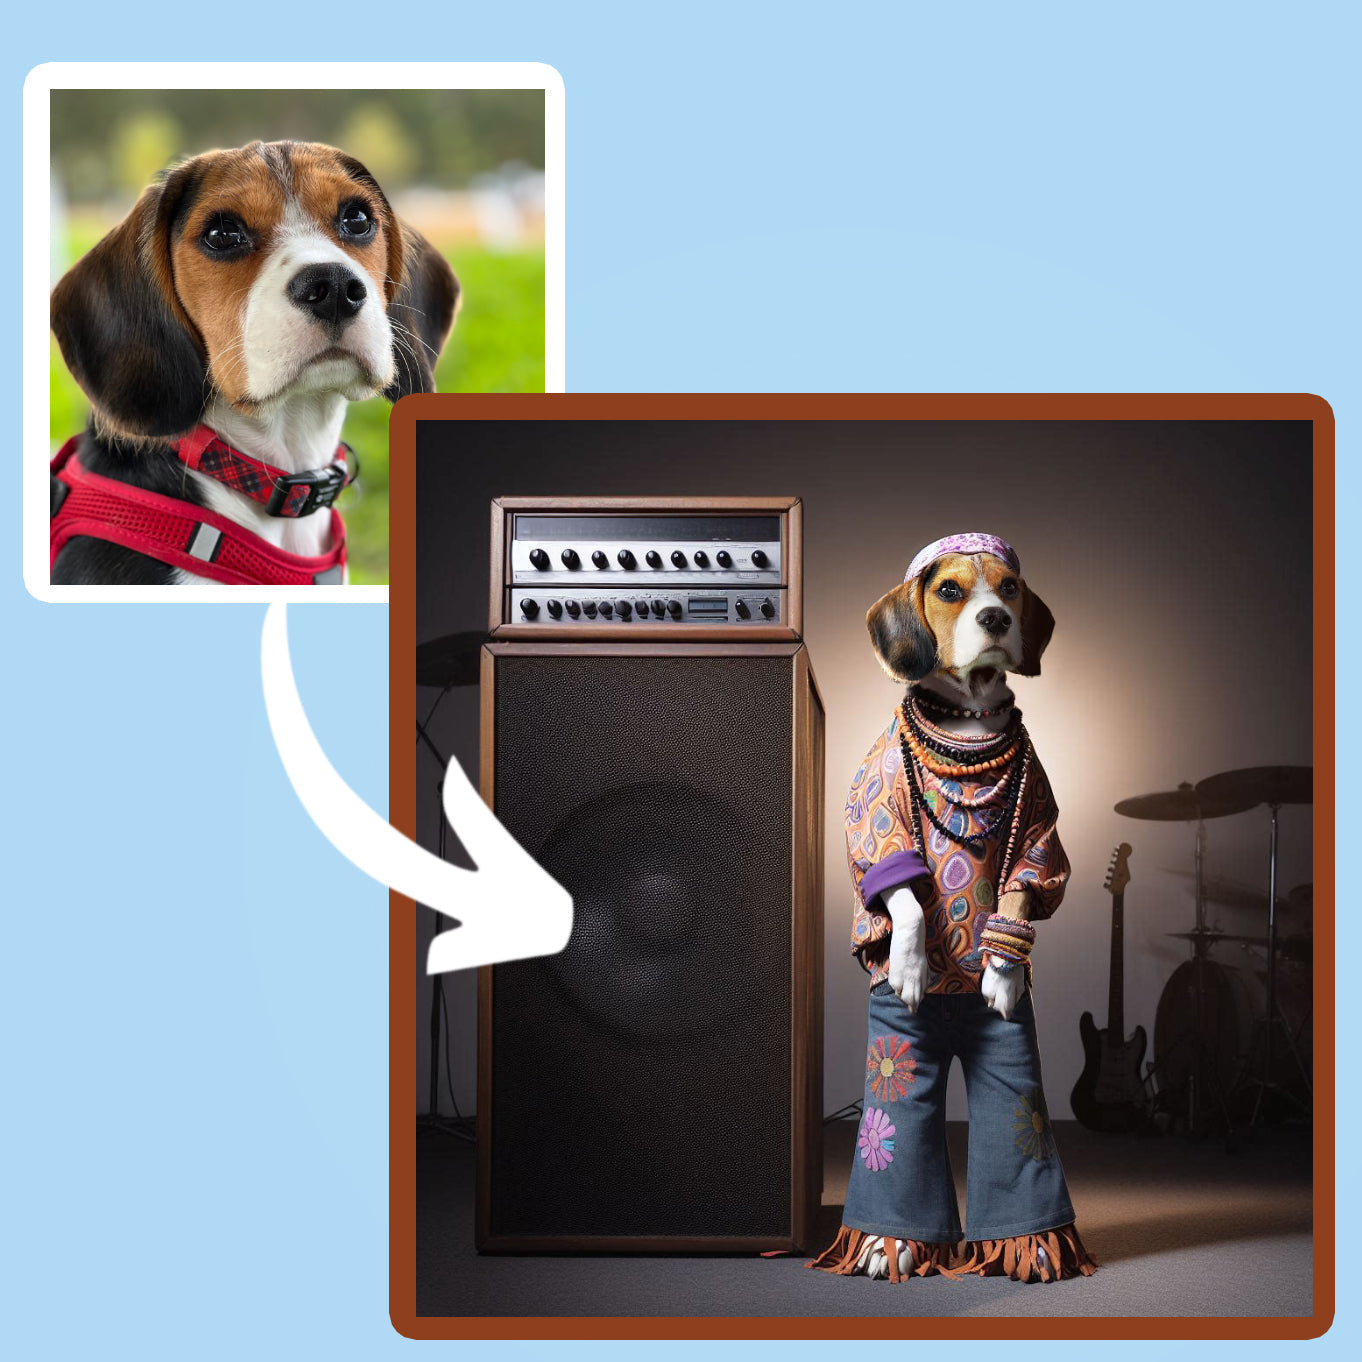 A reto pet portrait 1960s a beagle dog standing like a human next to a large music speaker